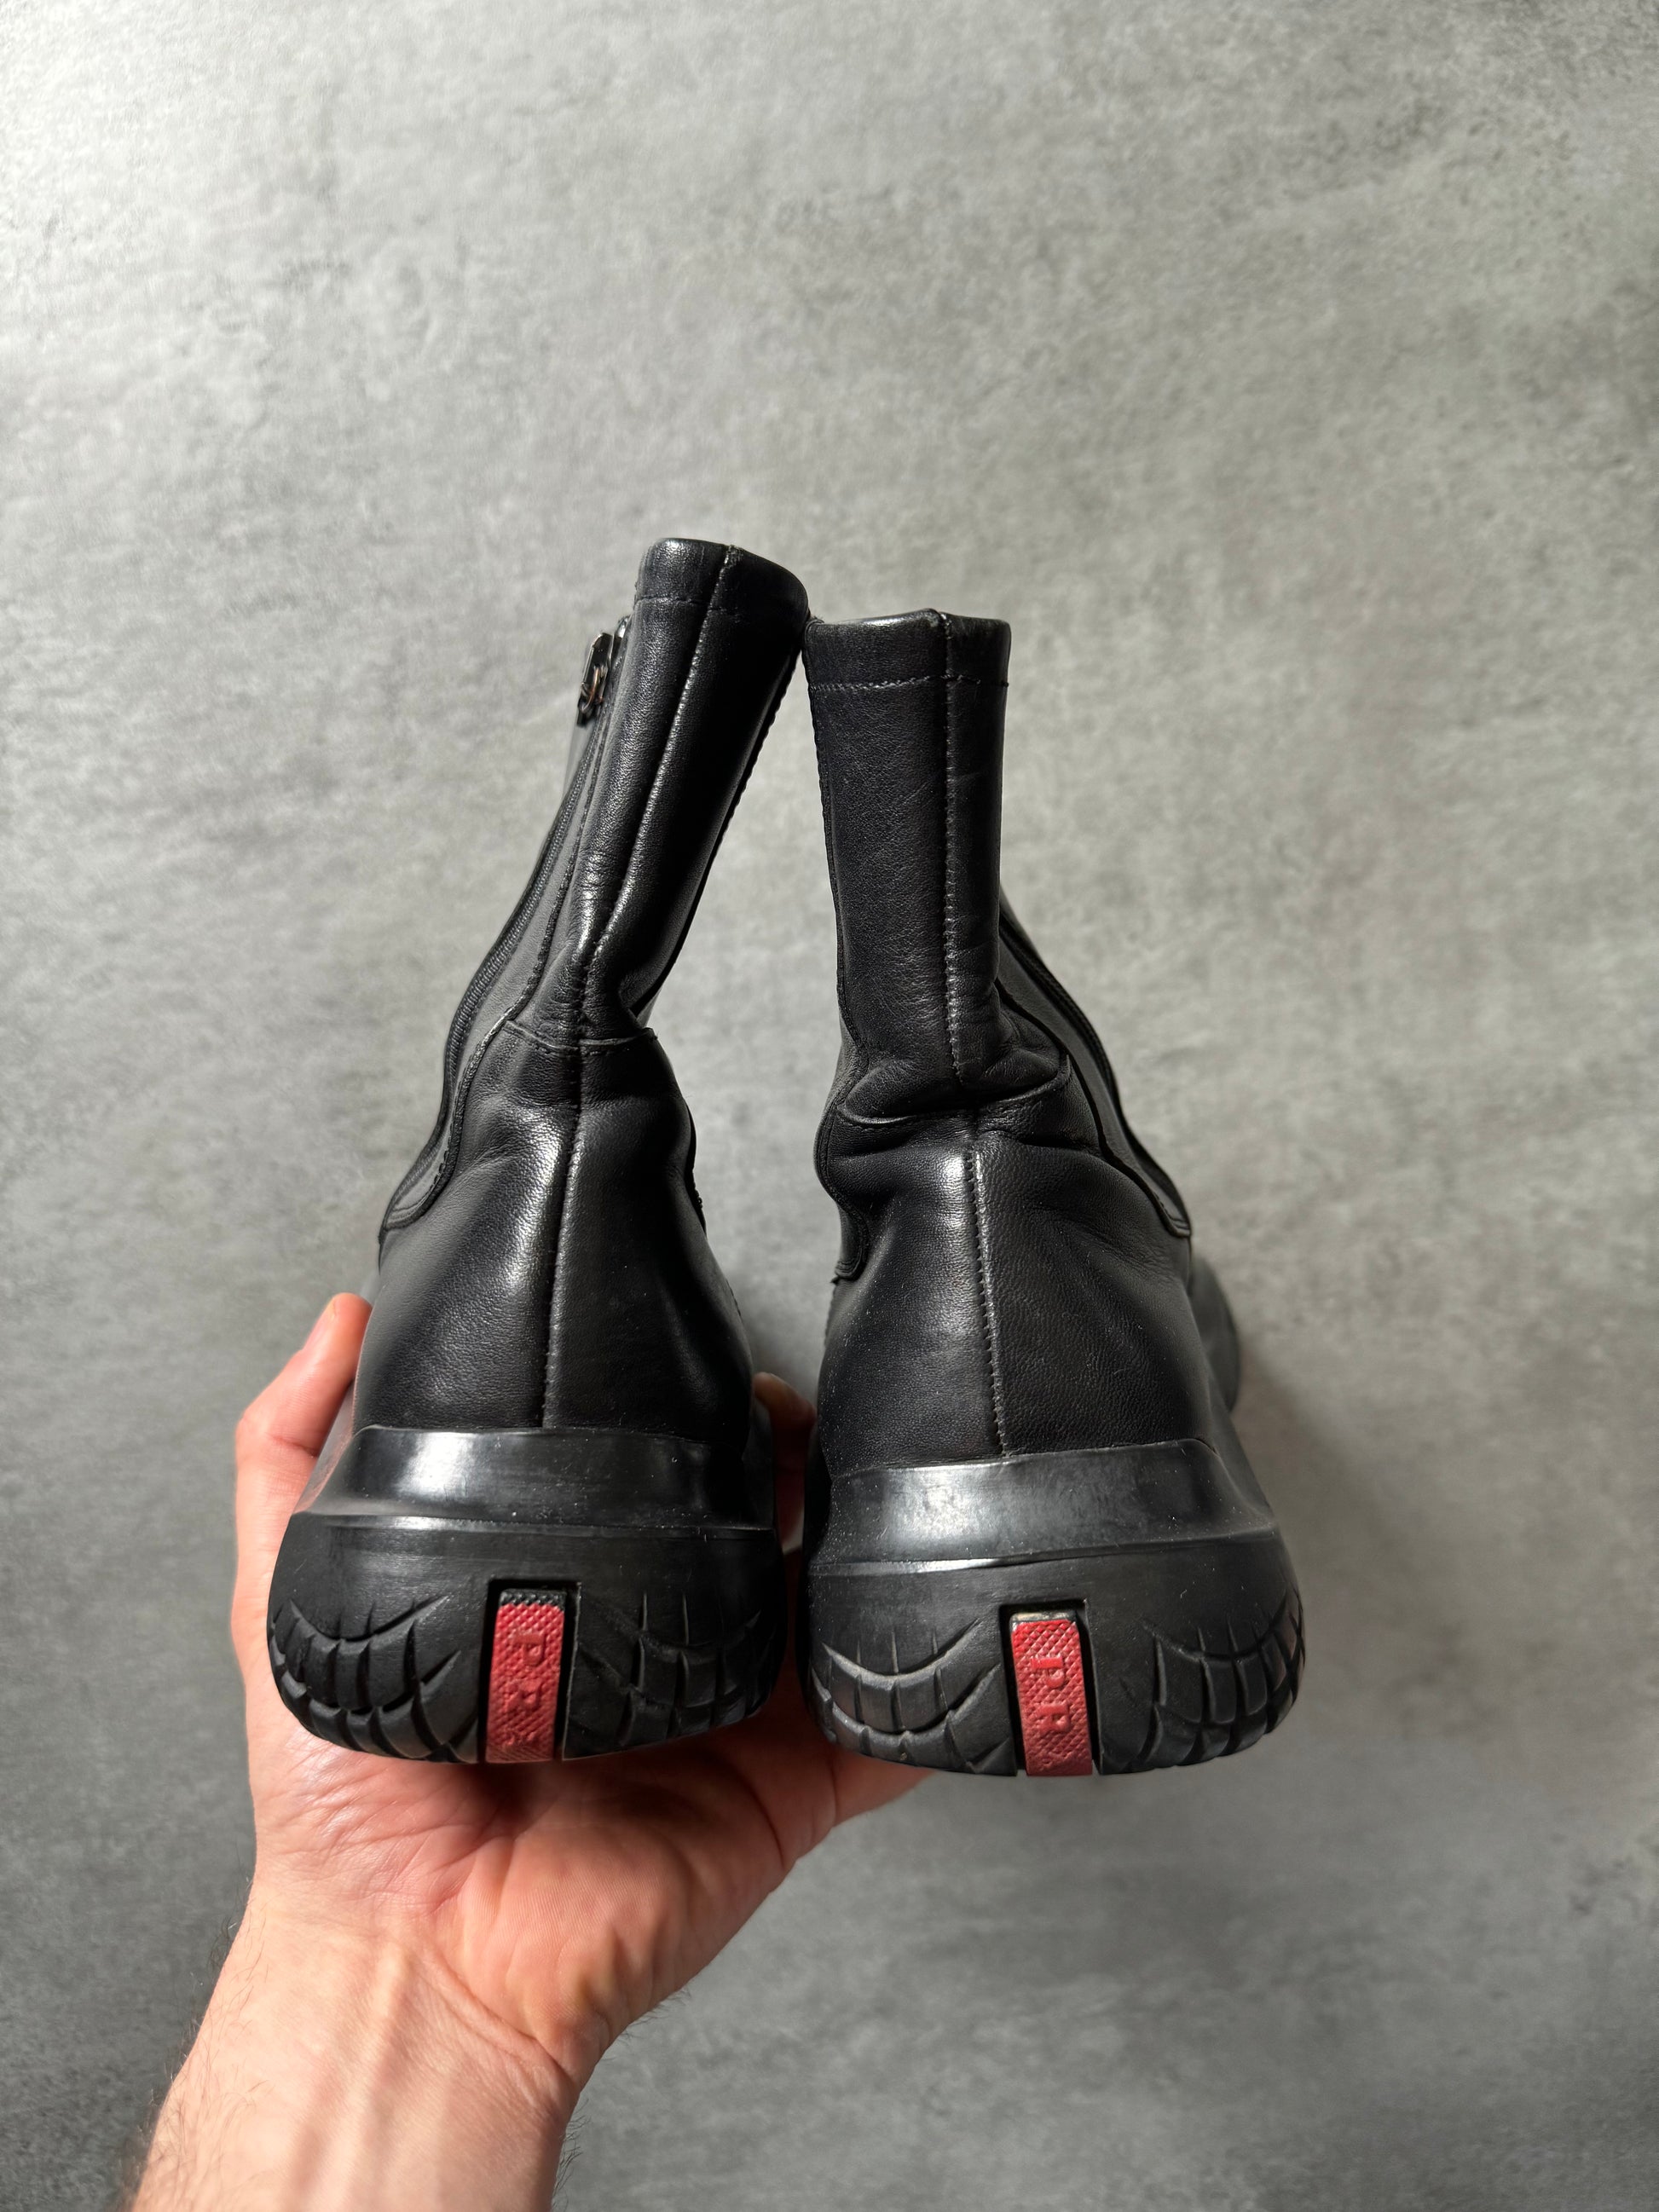 FW1999 Prada Black Leather Boots (39,5) - 7